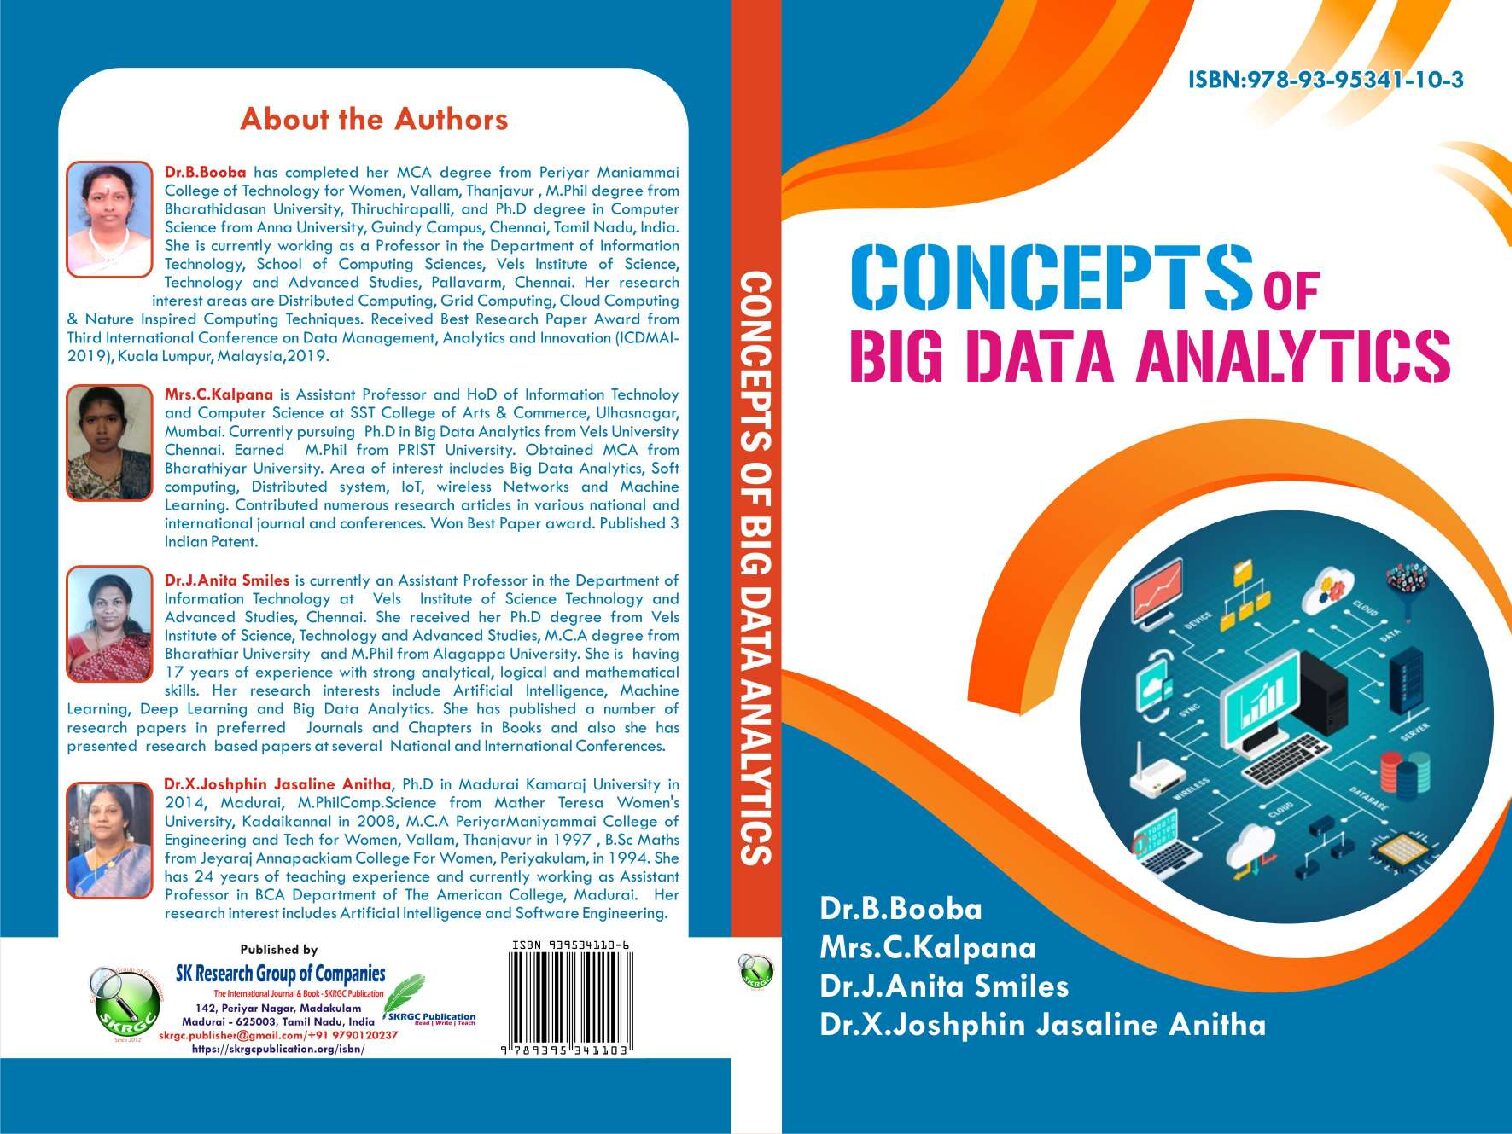 Concepts of Big Data Analytics